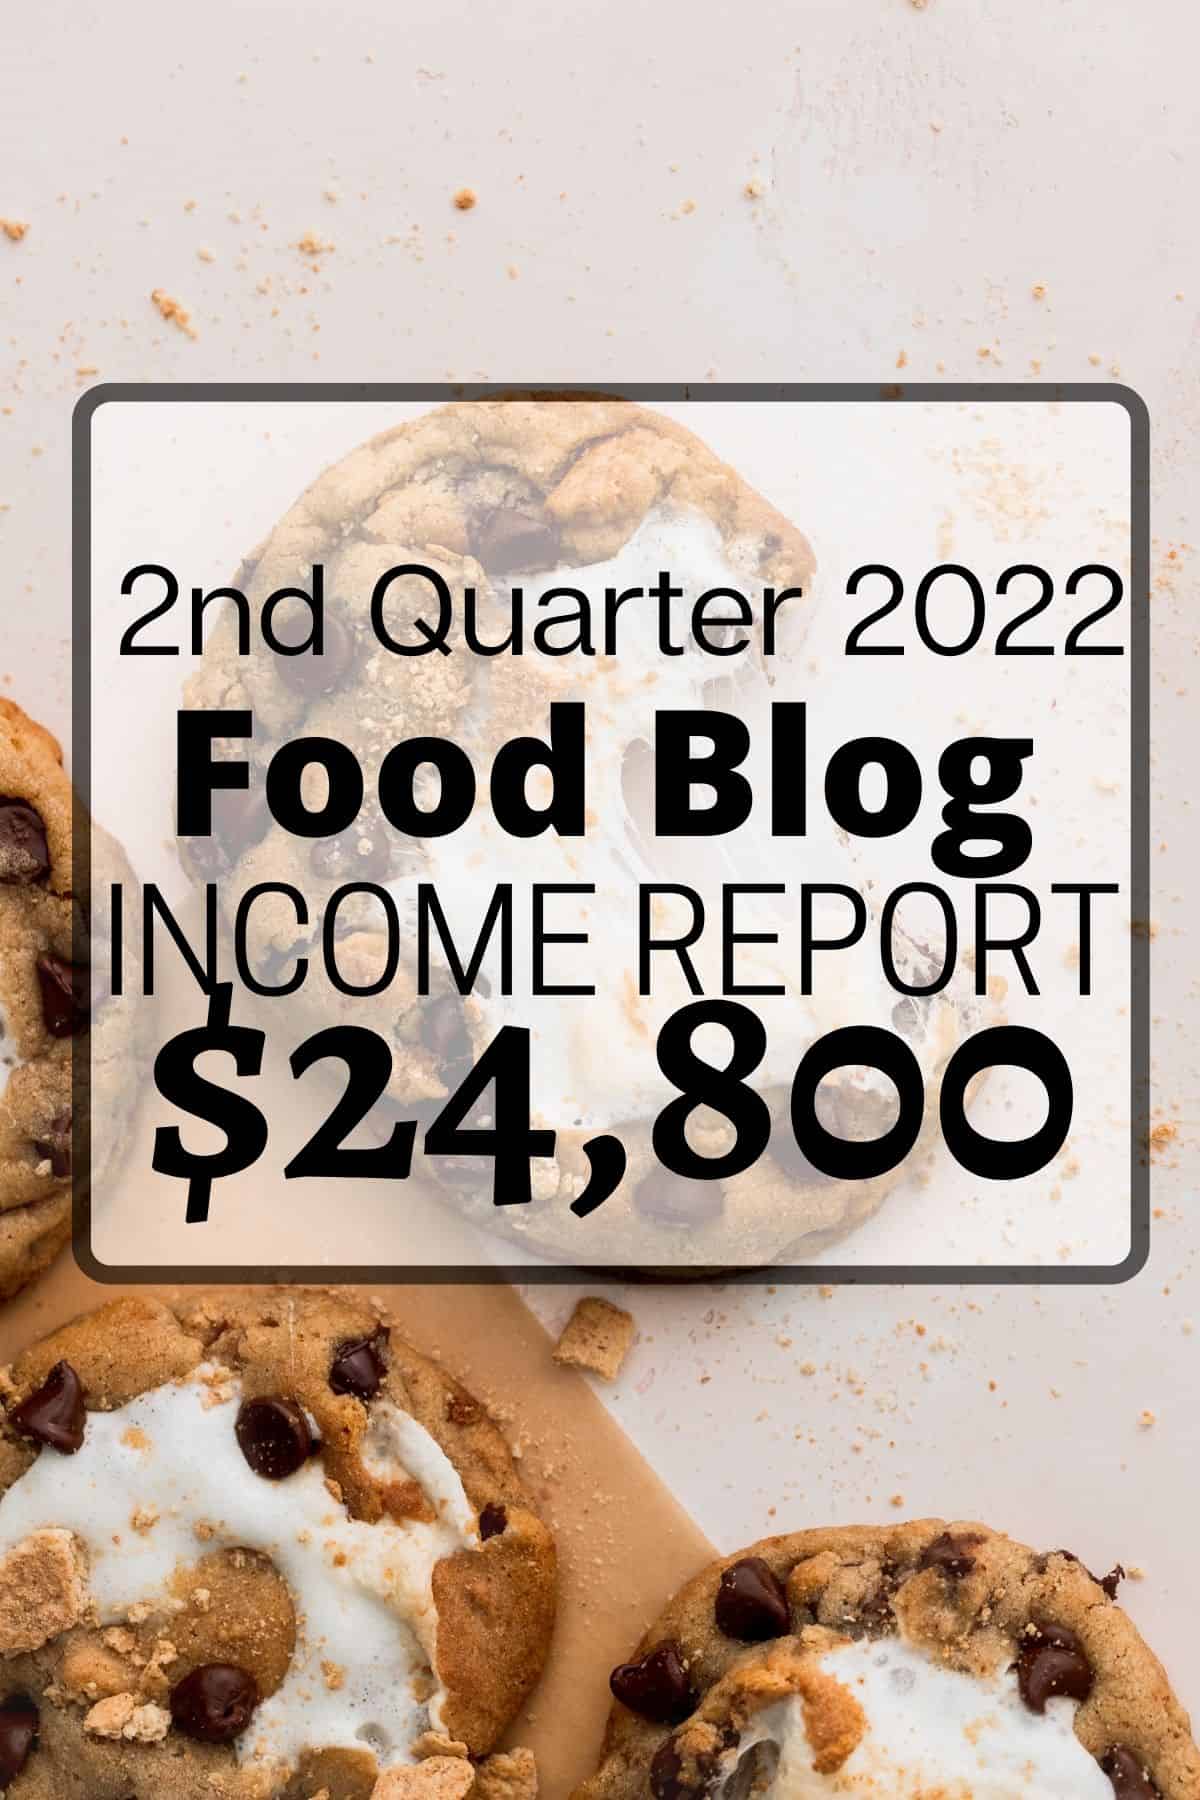 Food Blog Income Report- 2nd Quarter 2022